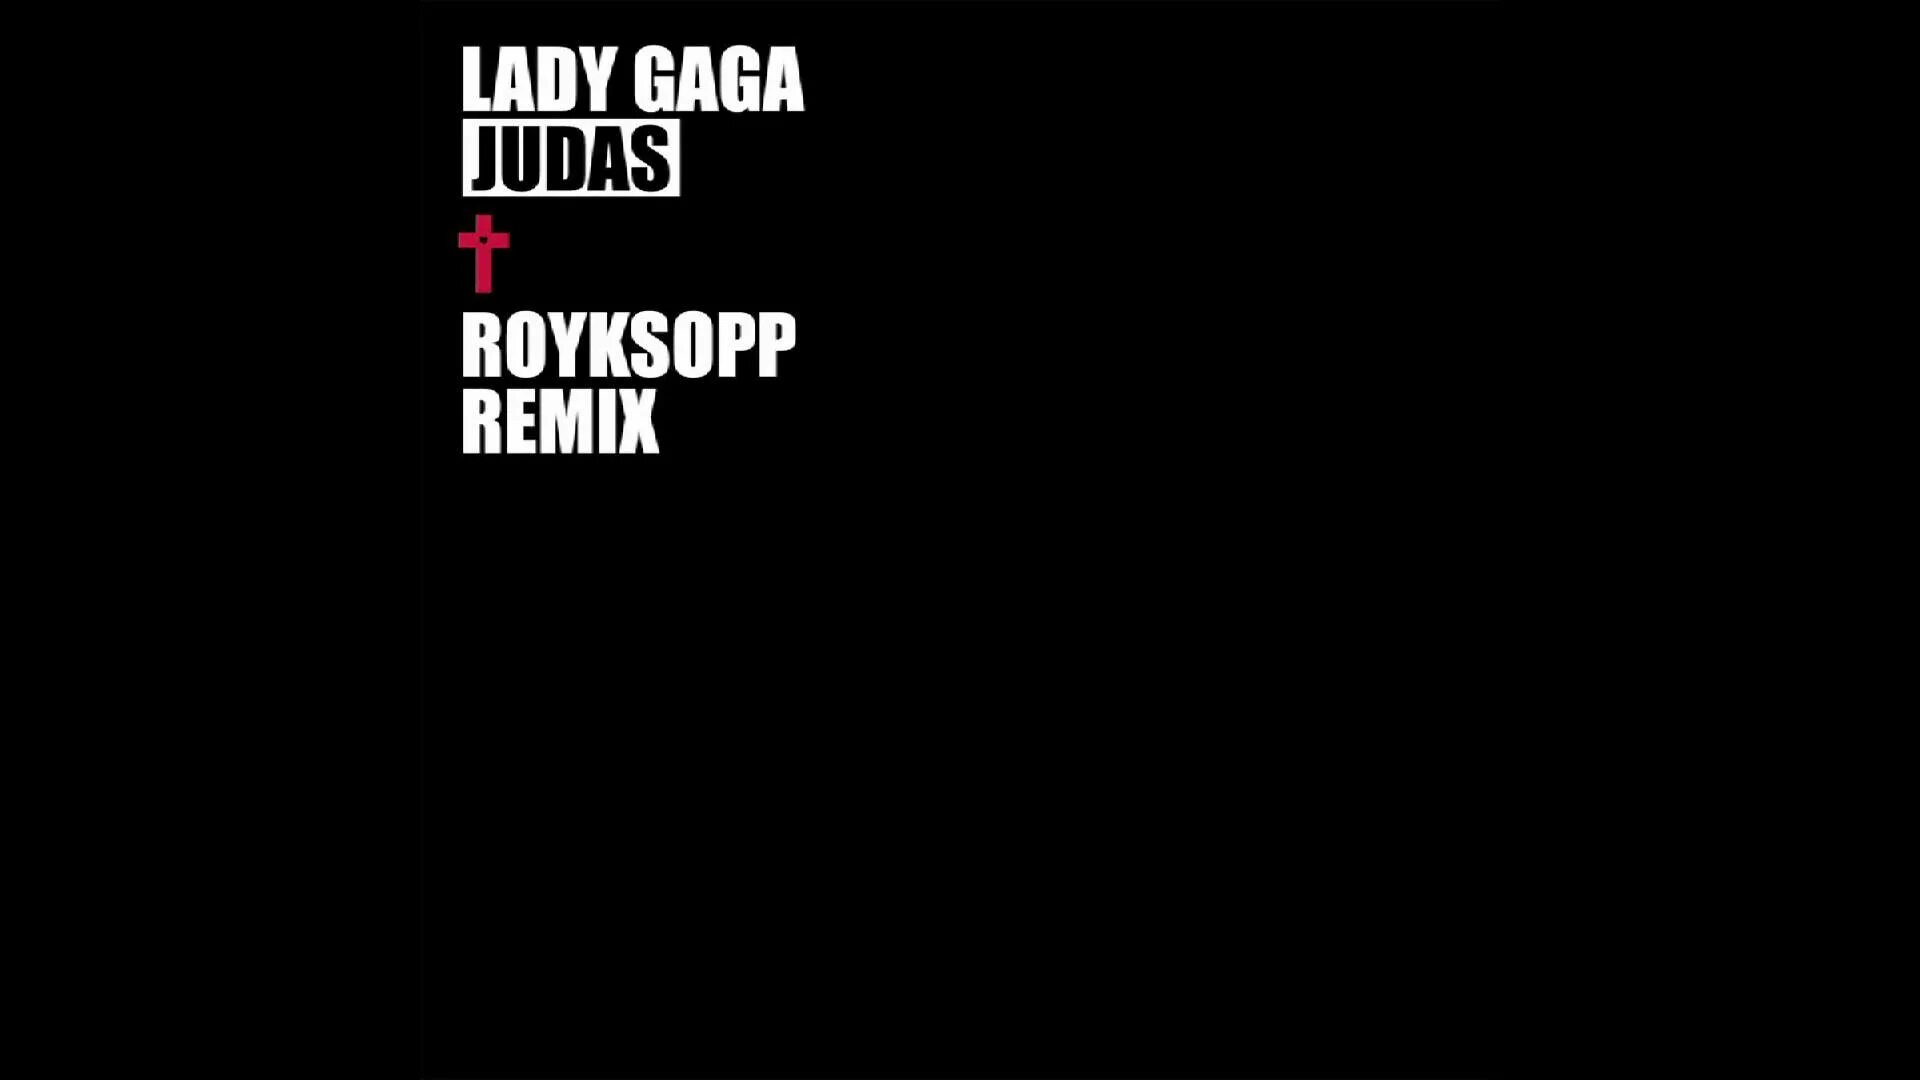 Judas ремикс. Lady Gaga Judas Cover. Lady Gaga "the Remix". R3hab Remix. Lady gaga dj johnny remix always